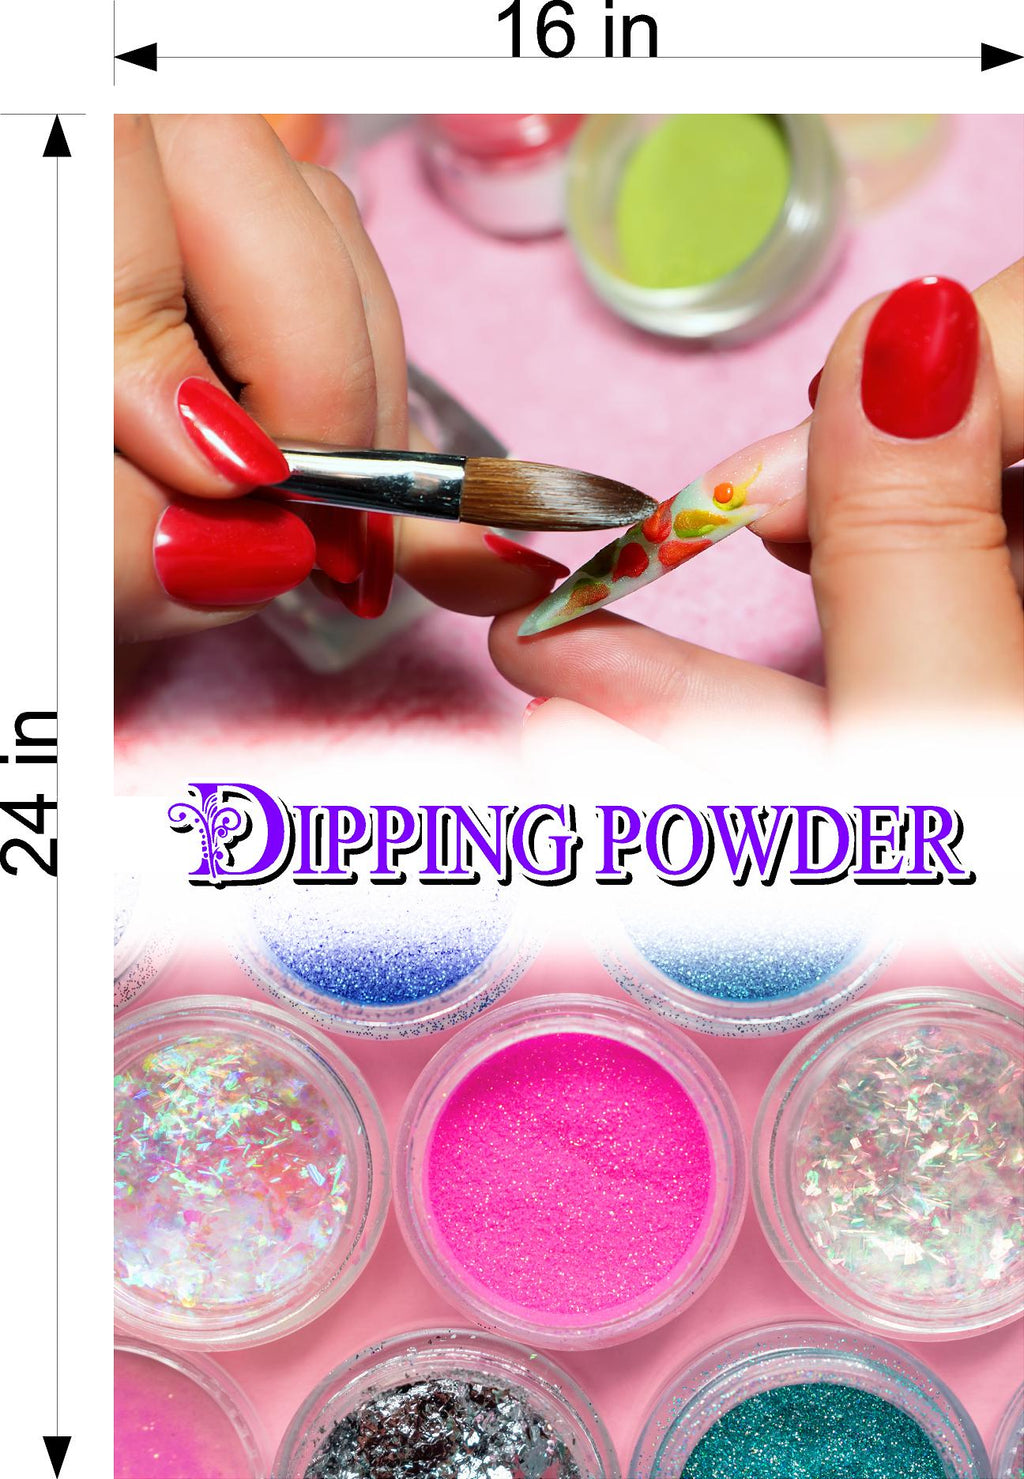 Dipping Powder 06 Photo-Realistic Paper Poster Premium Interior Inside Sign Non-Laminated Nail Salon Vertical